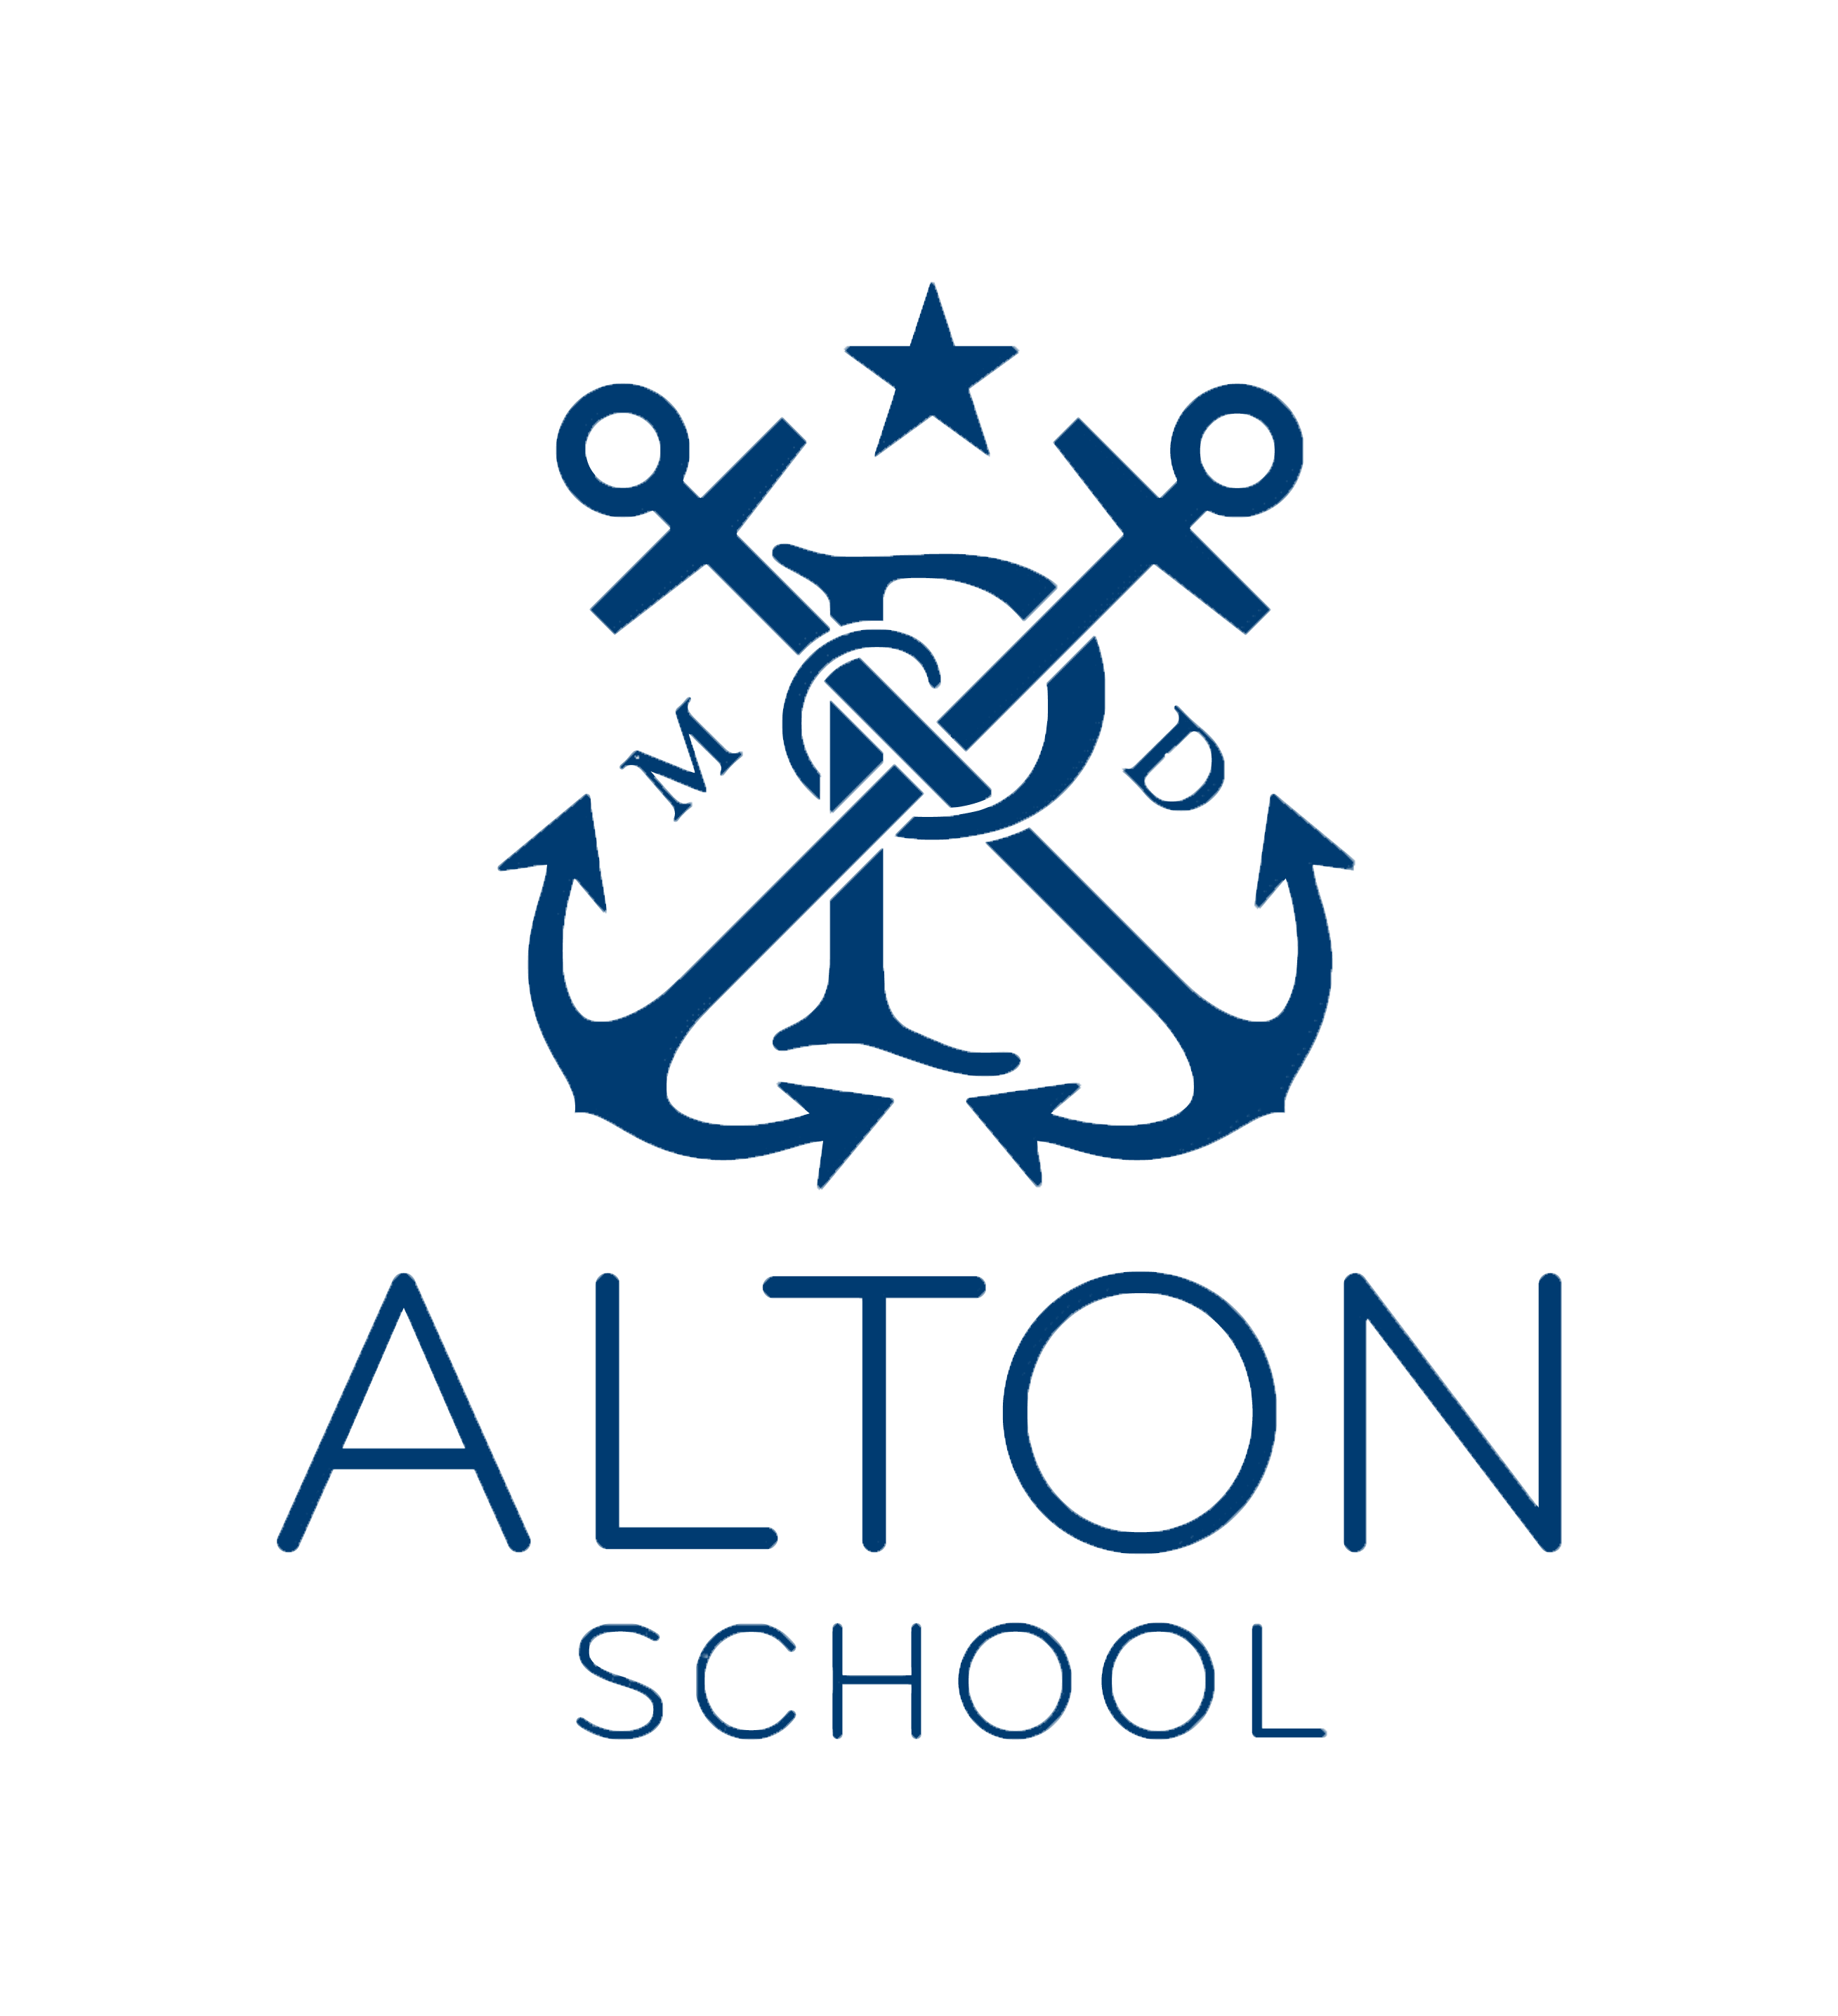 alton high school logo